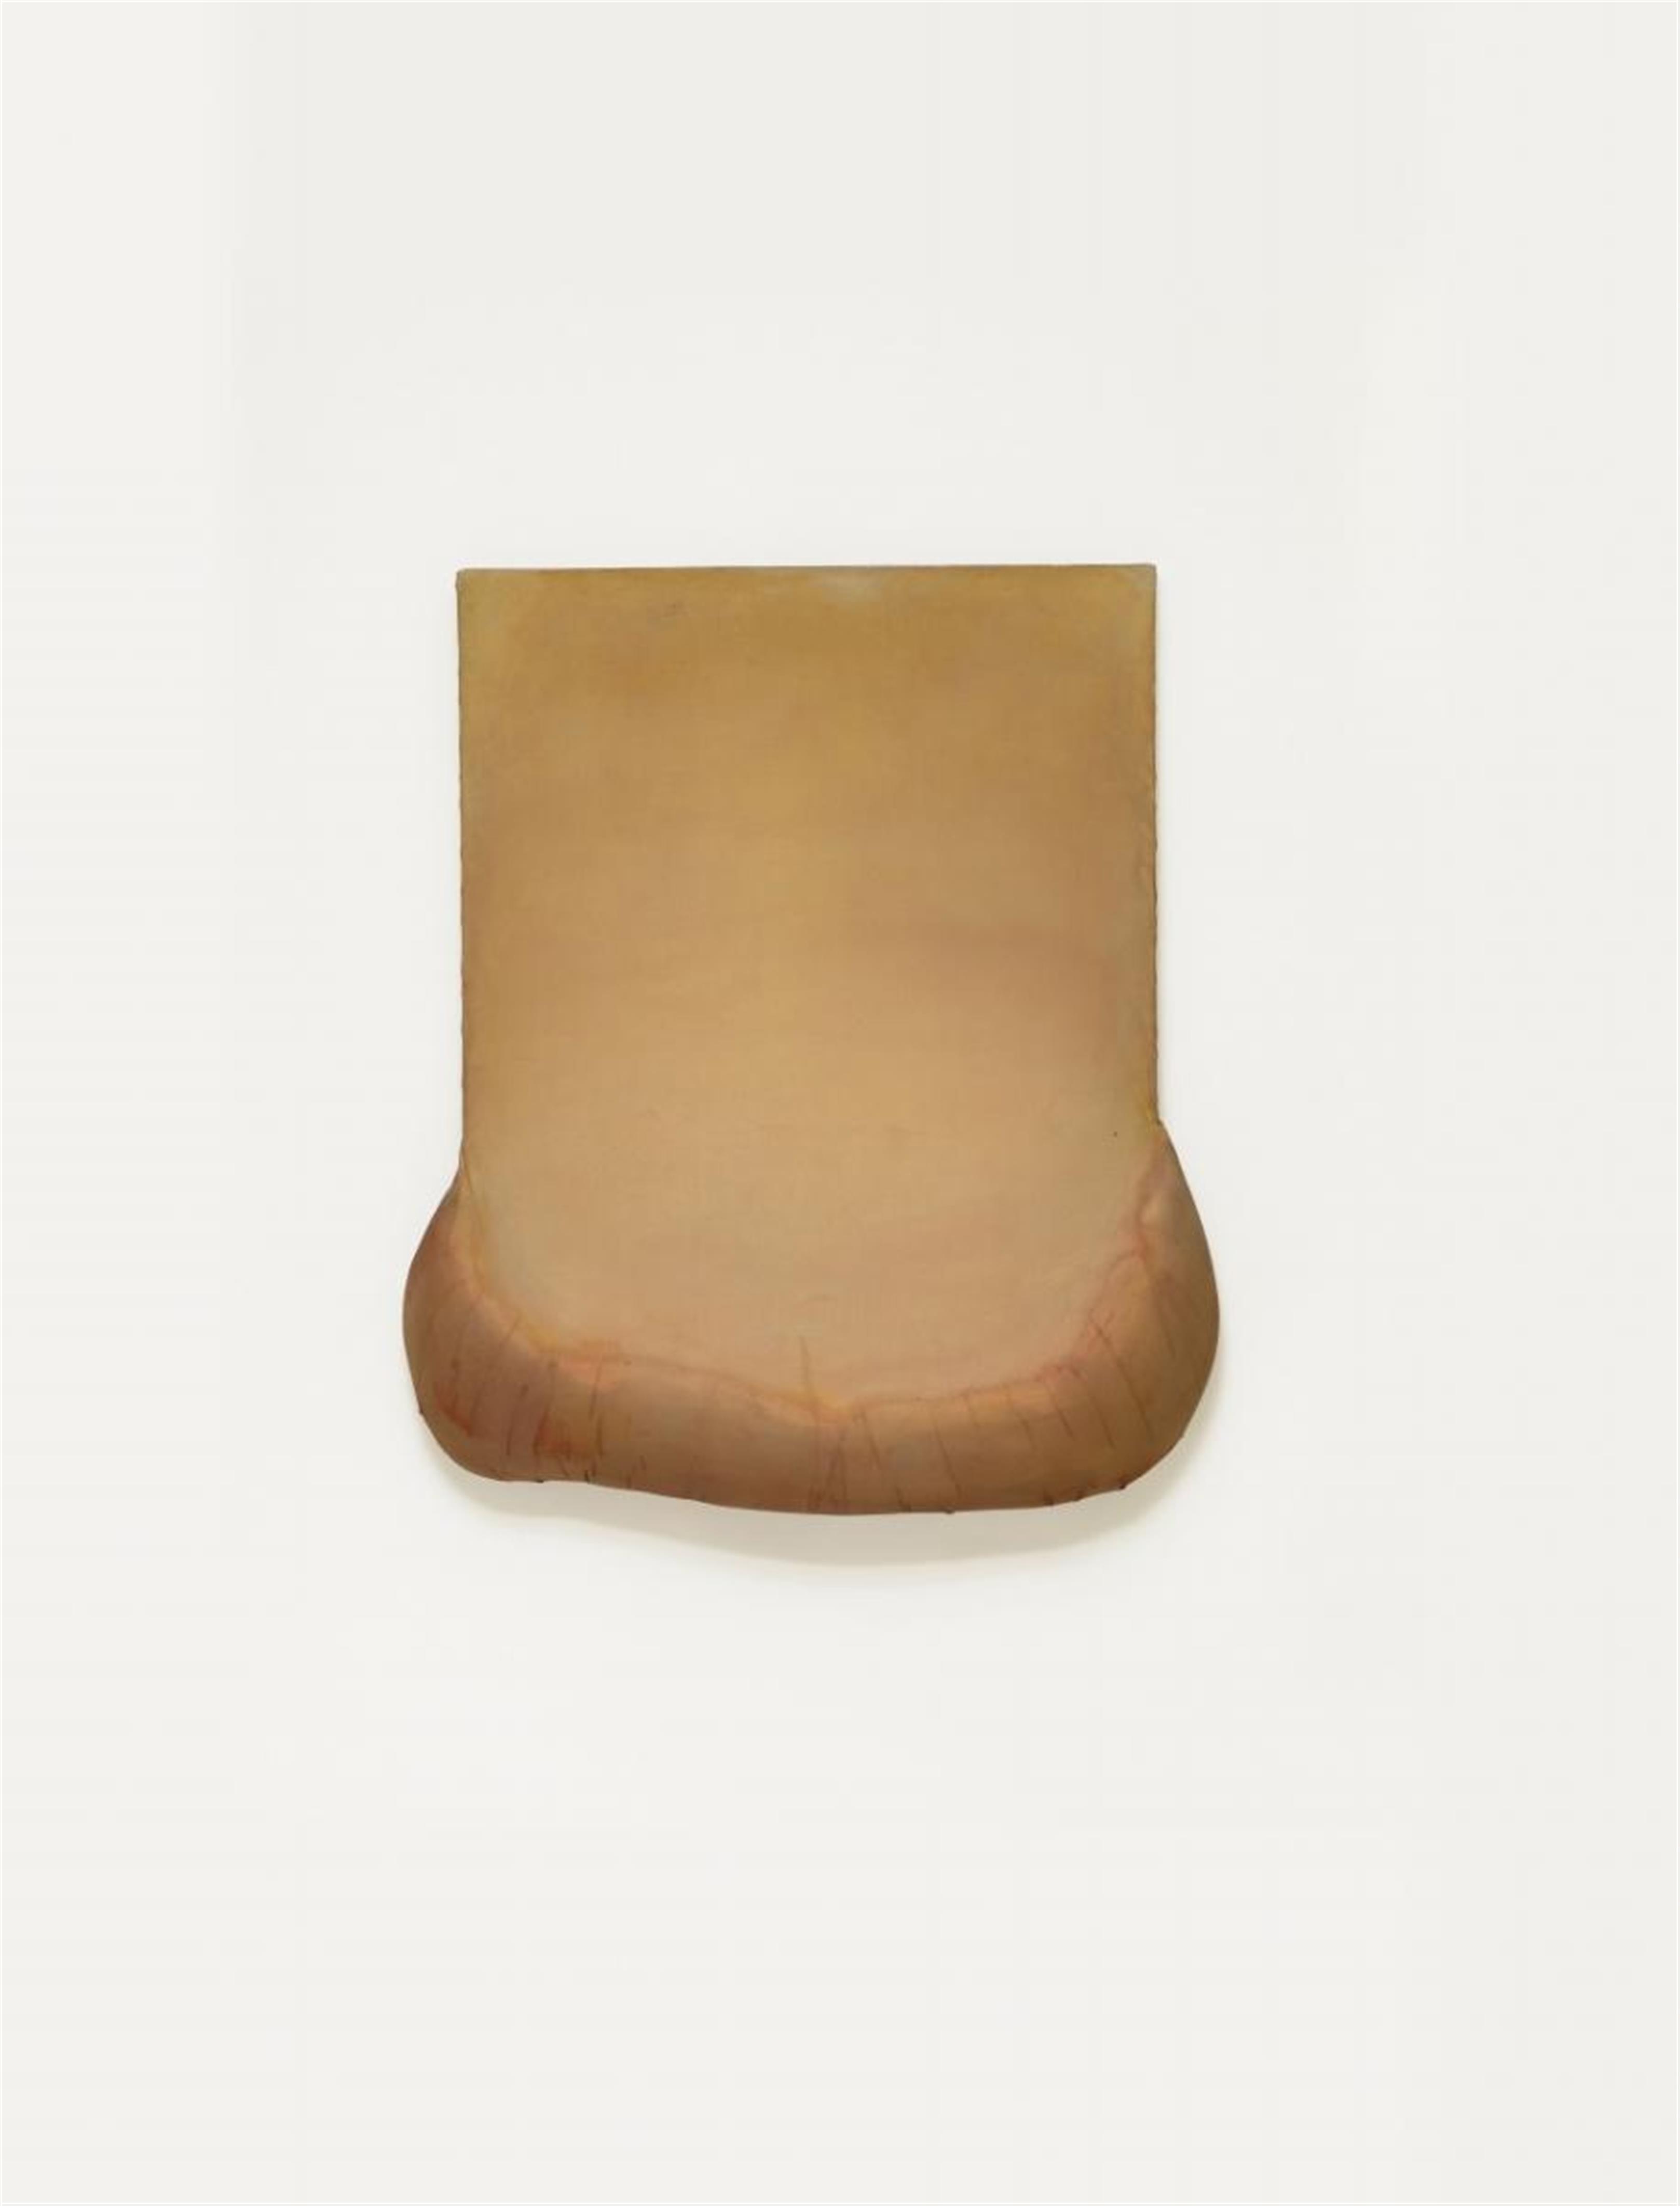 Gotthard Graubner - Untitled (Bagged cushion) - image-1